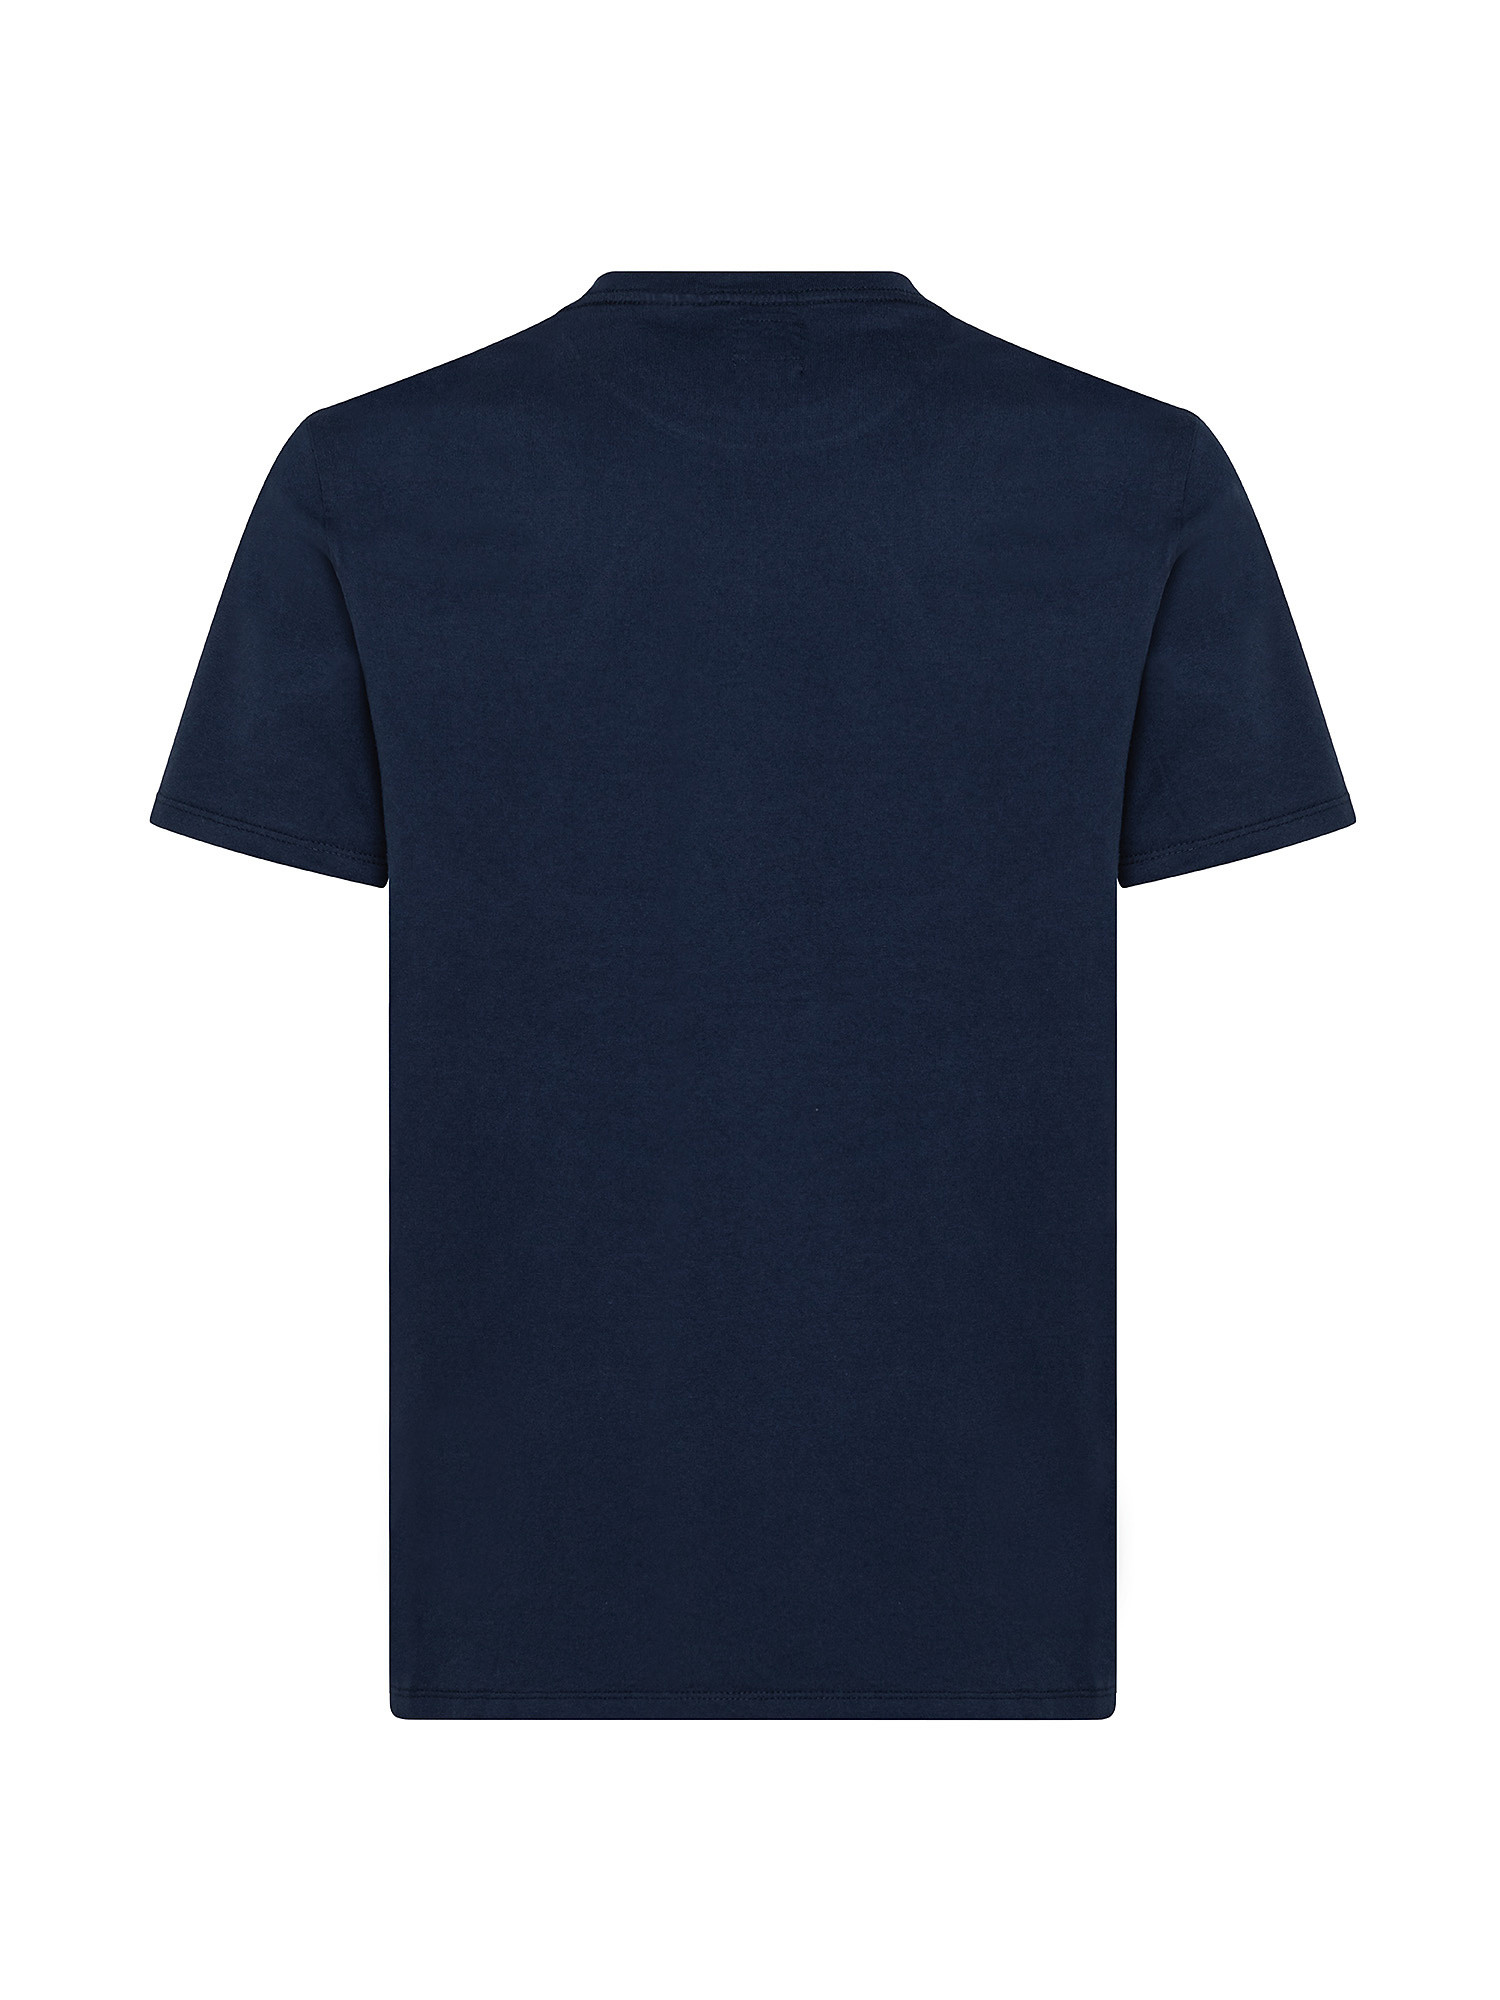 T-shirt Original con logo, Blu, large